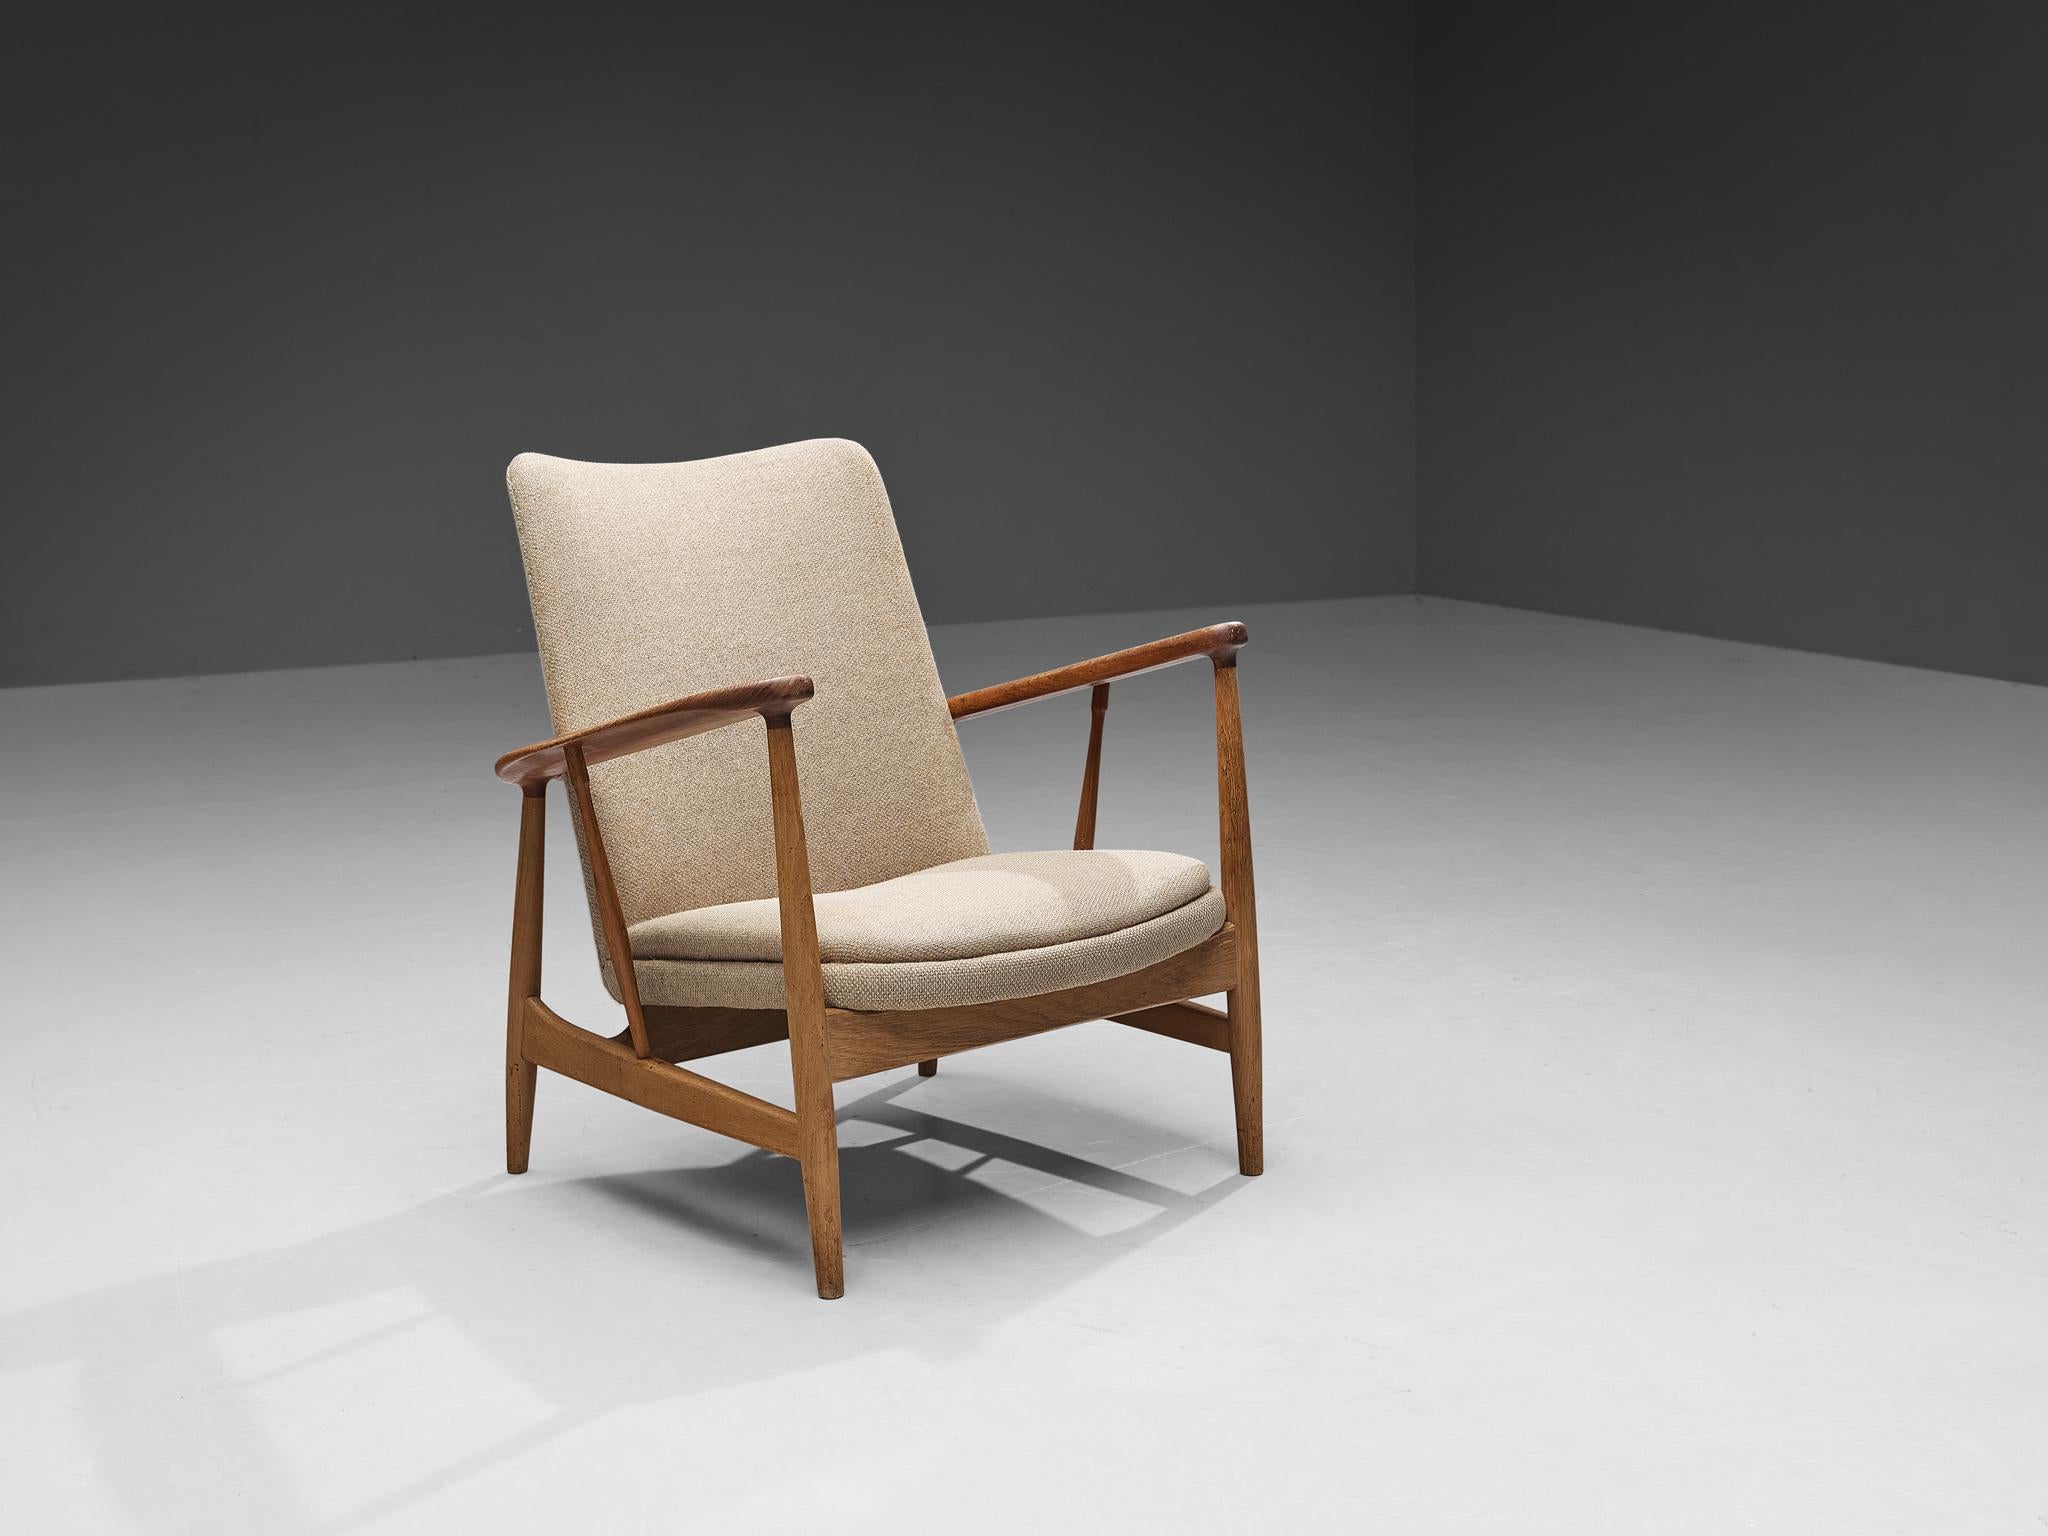 Finn Juhl for Søren Willadsen Møbel-Fabrik, easy chair, model SW 86, teak, oak, wool, Denmark, 1953.

This chair has been designed in 1953 by Finn Juhl. This chair is one of the three designs by Juhl that were produced by Søren Willadsen. This easy